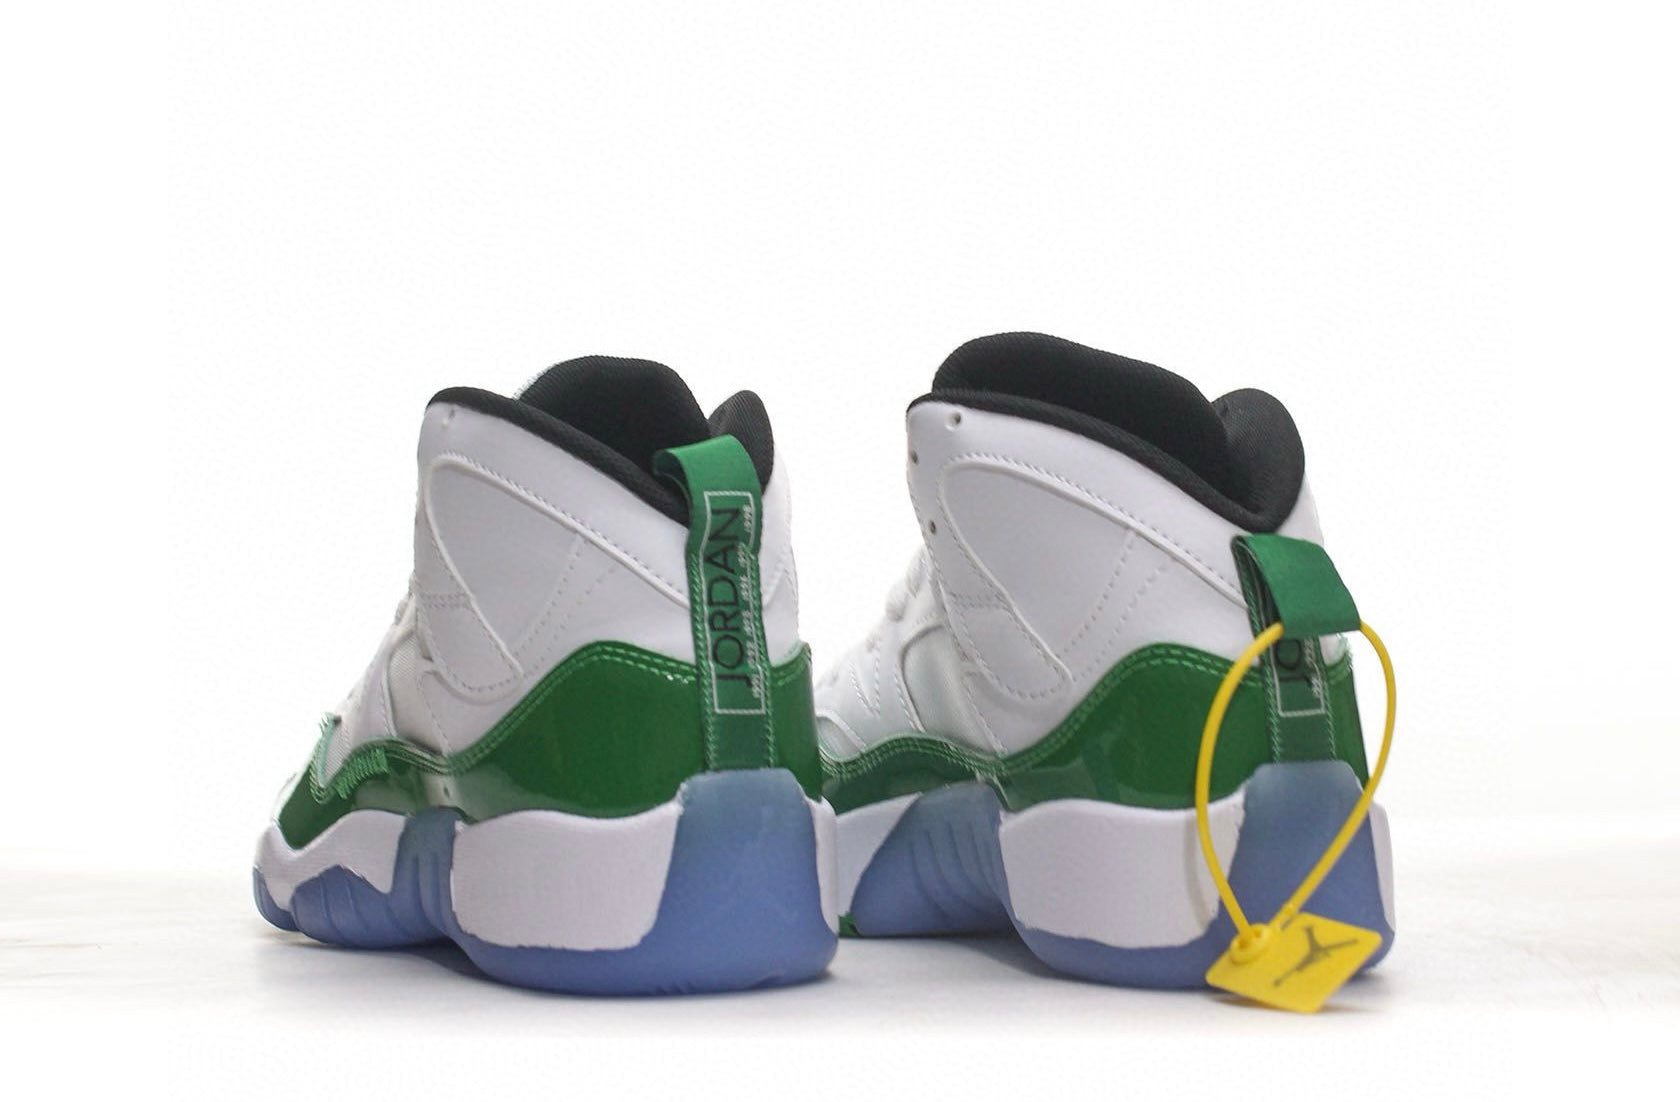 Nike air jordan rétro chaussures vertes